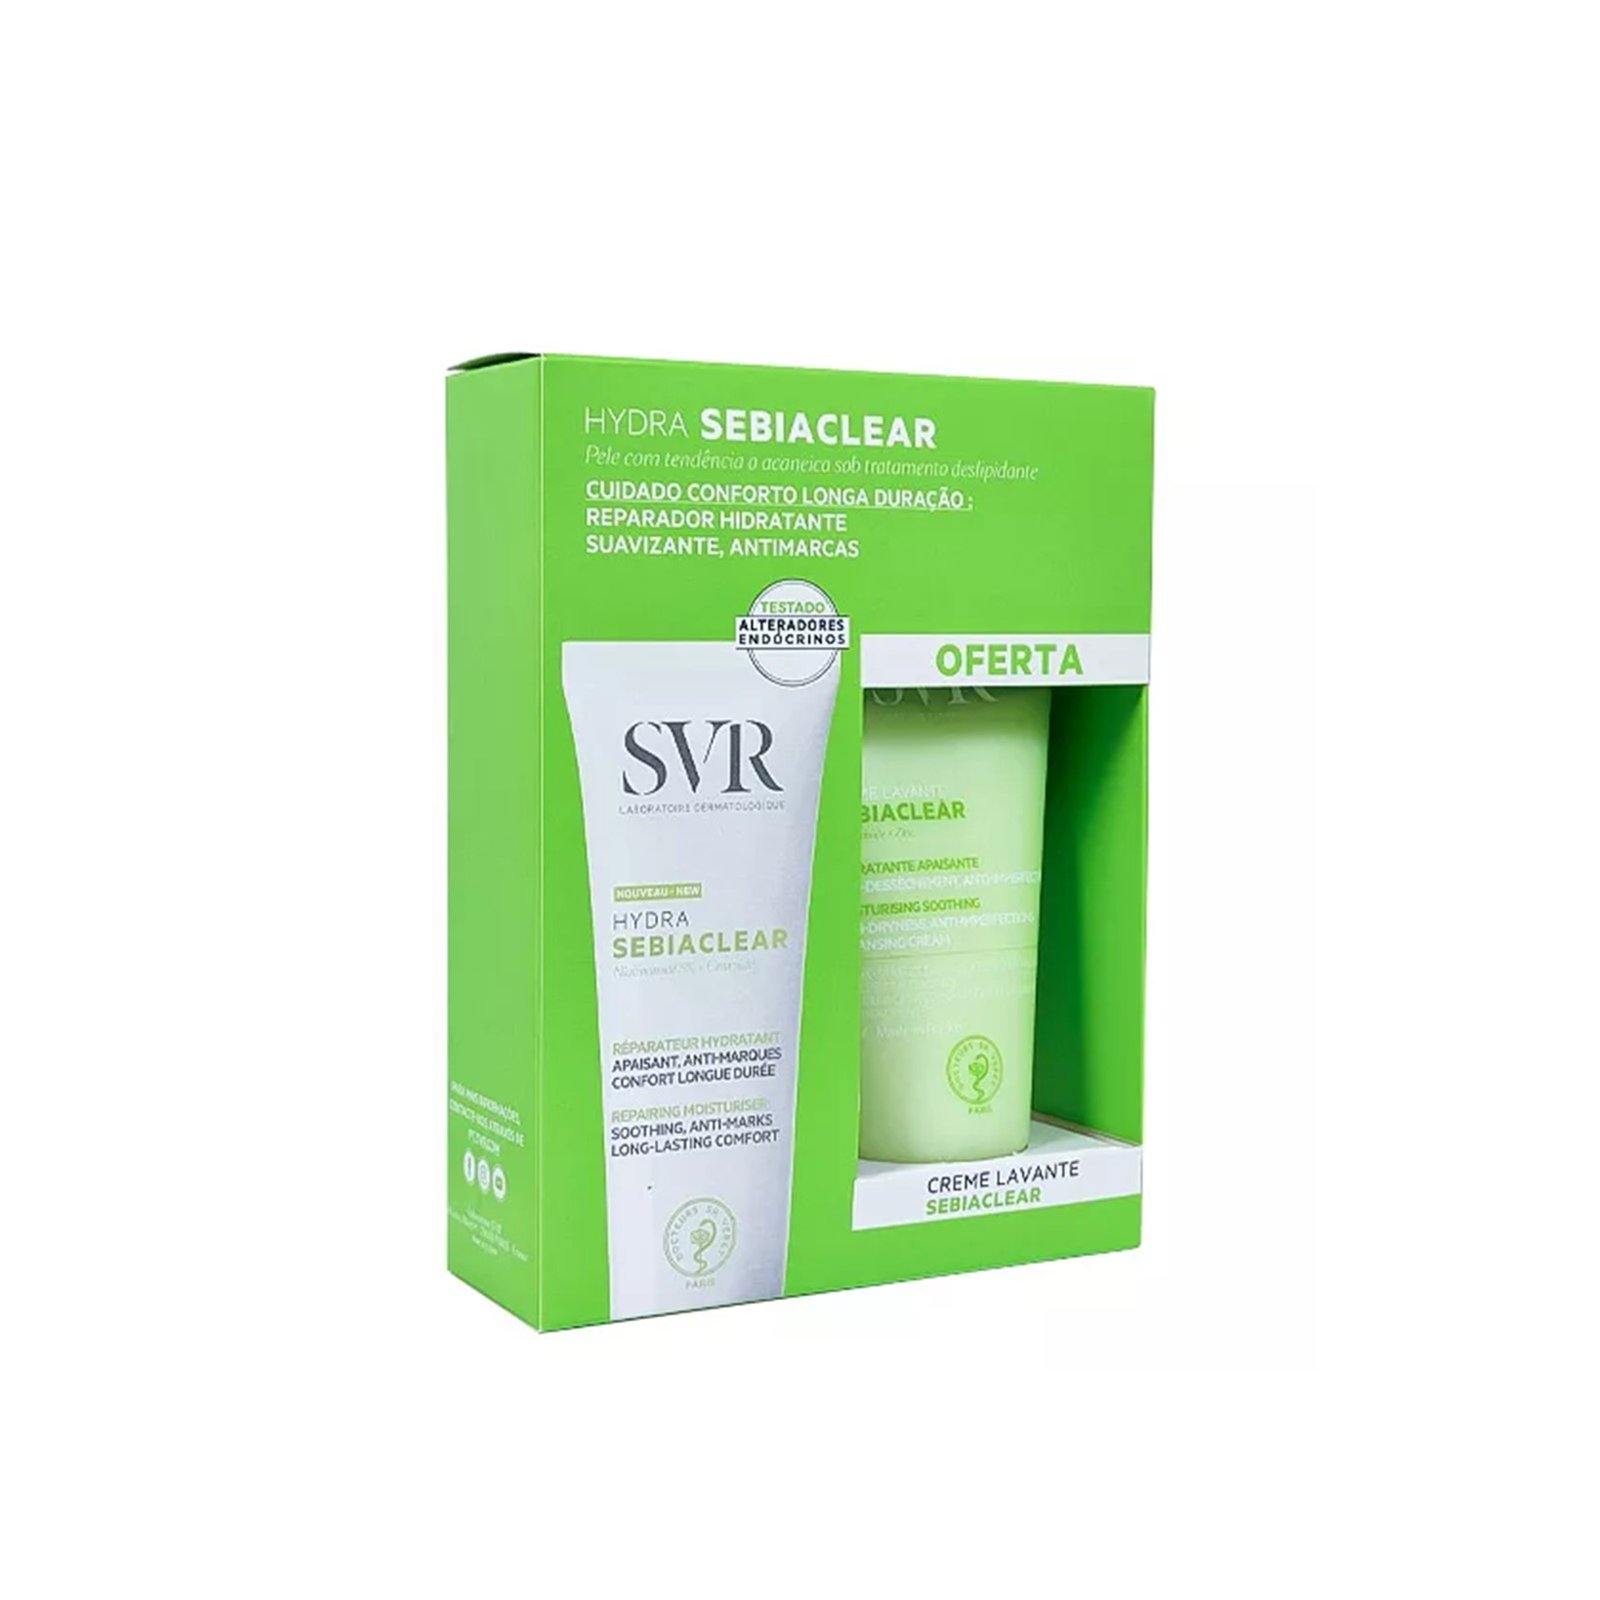 SVR Sebiaclear Hydra Repairing Moisturizer 40ml + Cleansing Cream 55ml